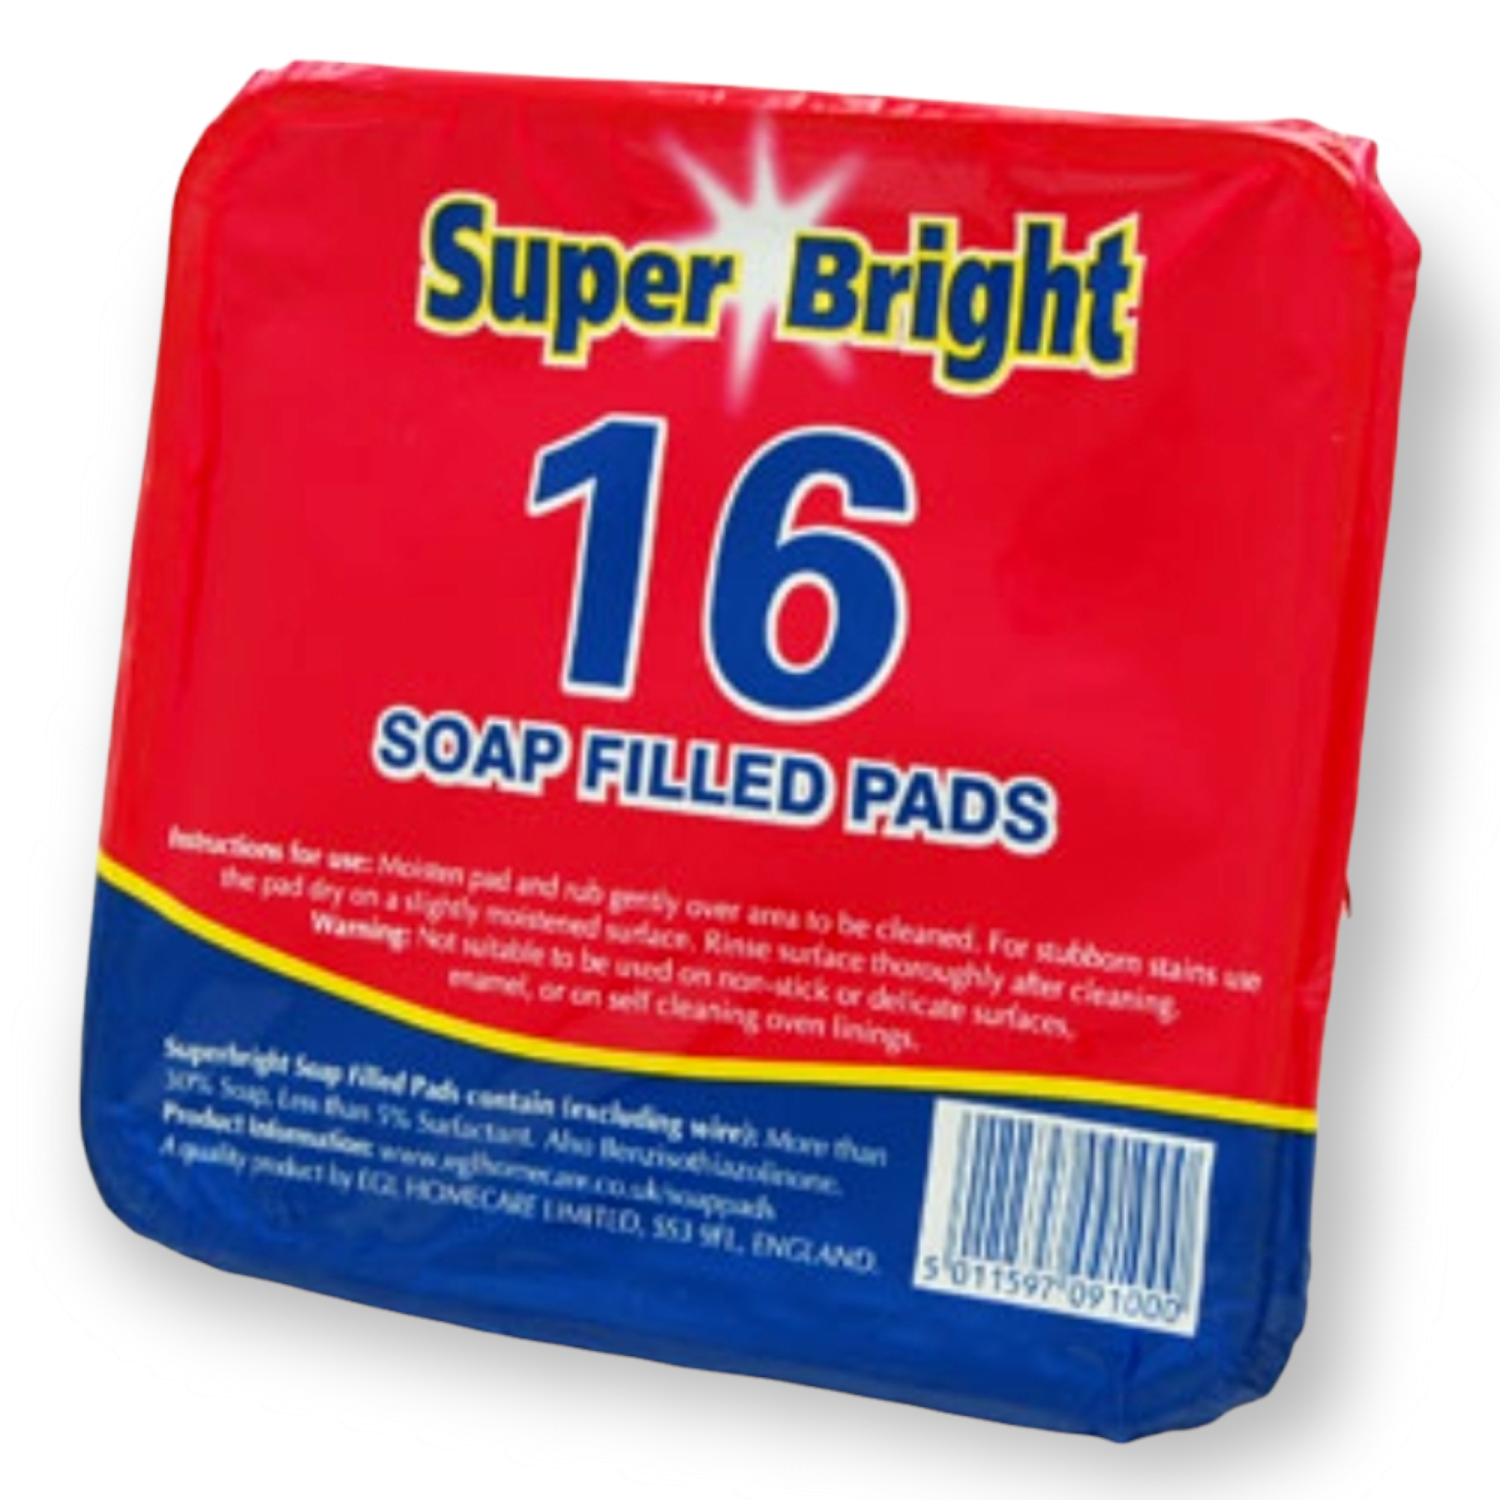 Super Bright Soap Filled Pads 16pk